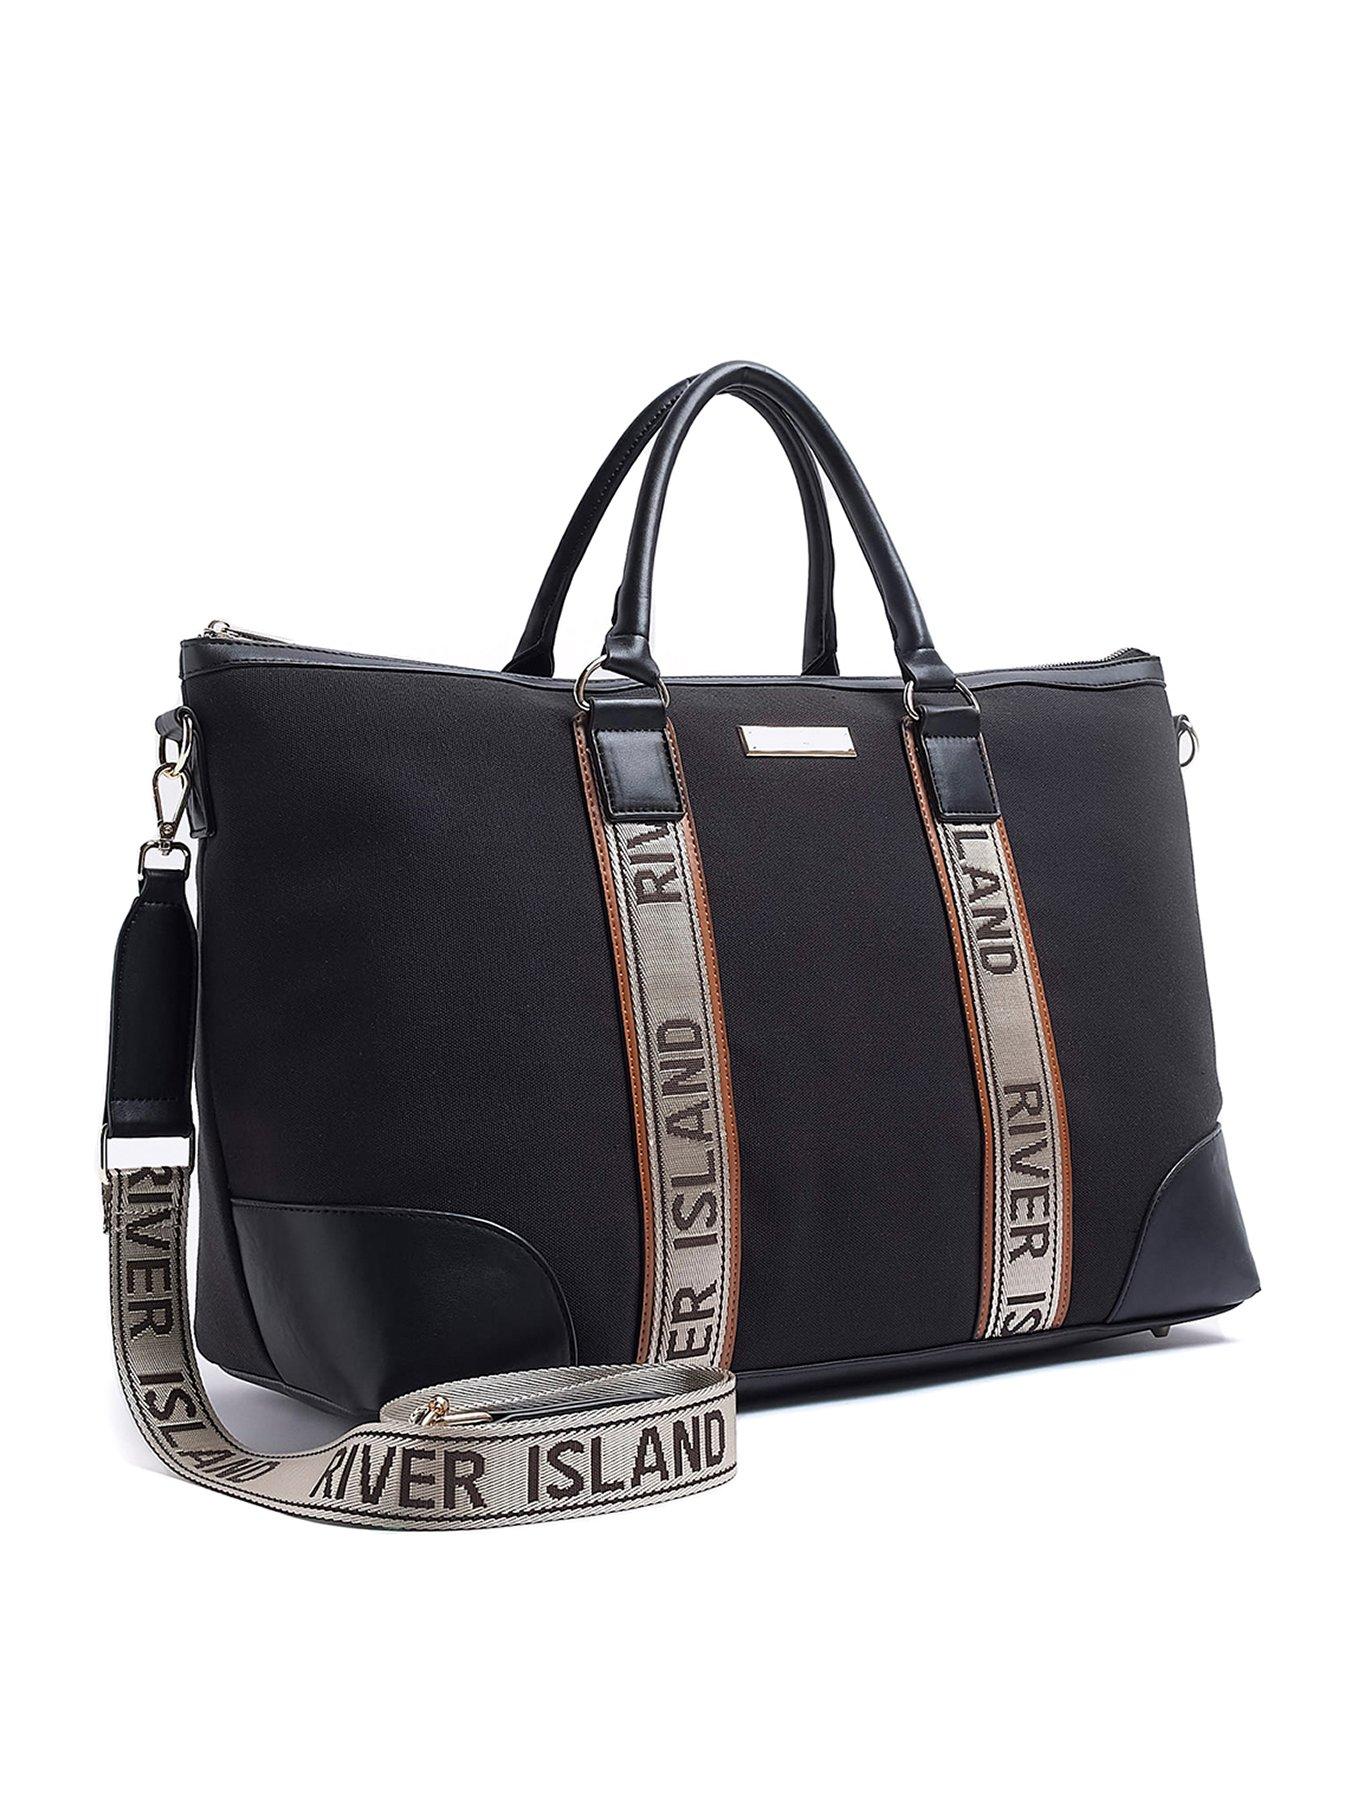 river island bags sale